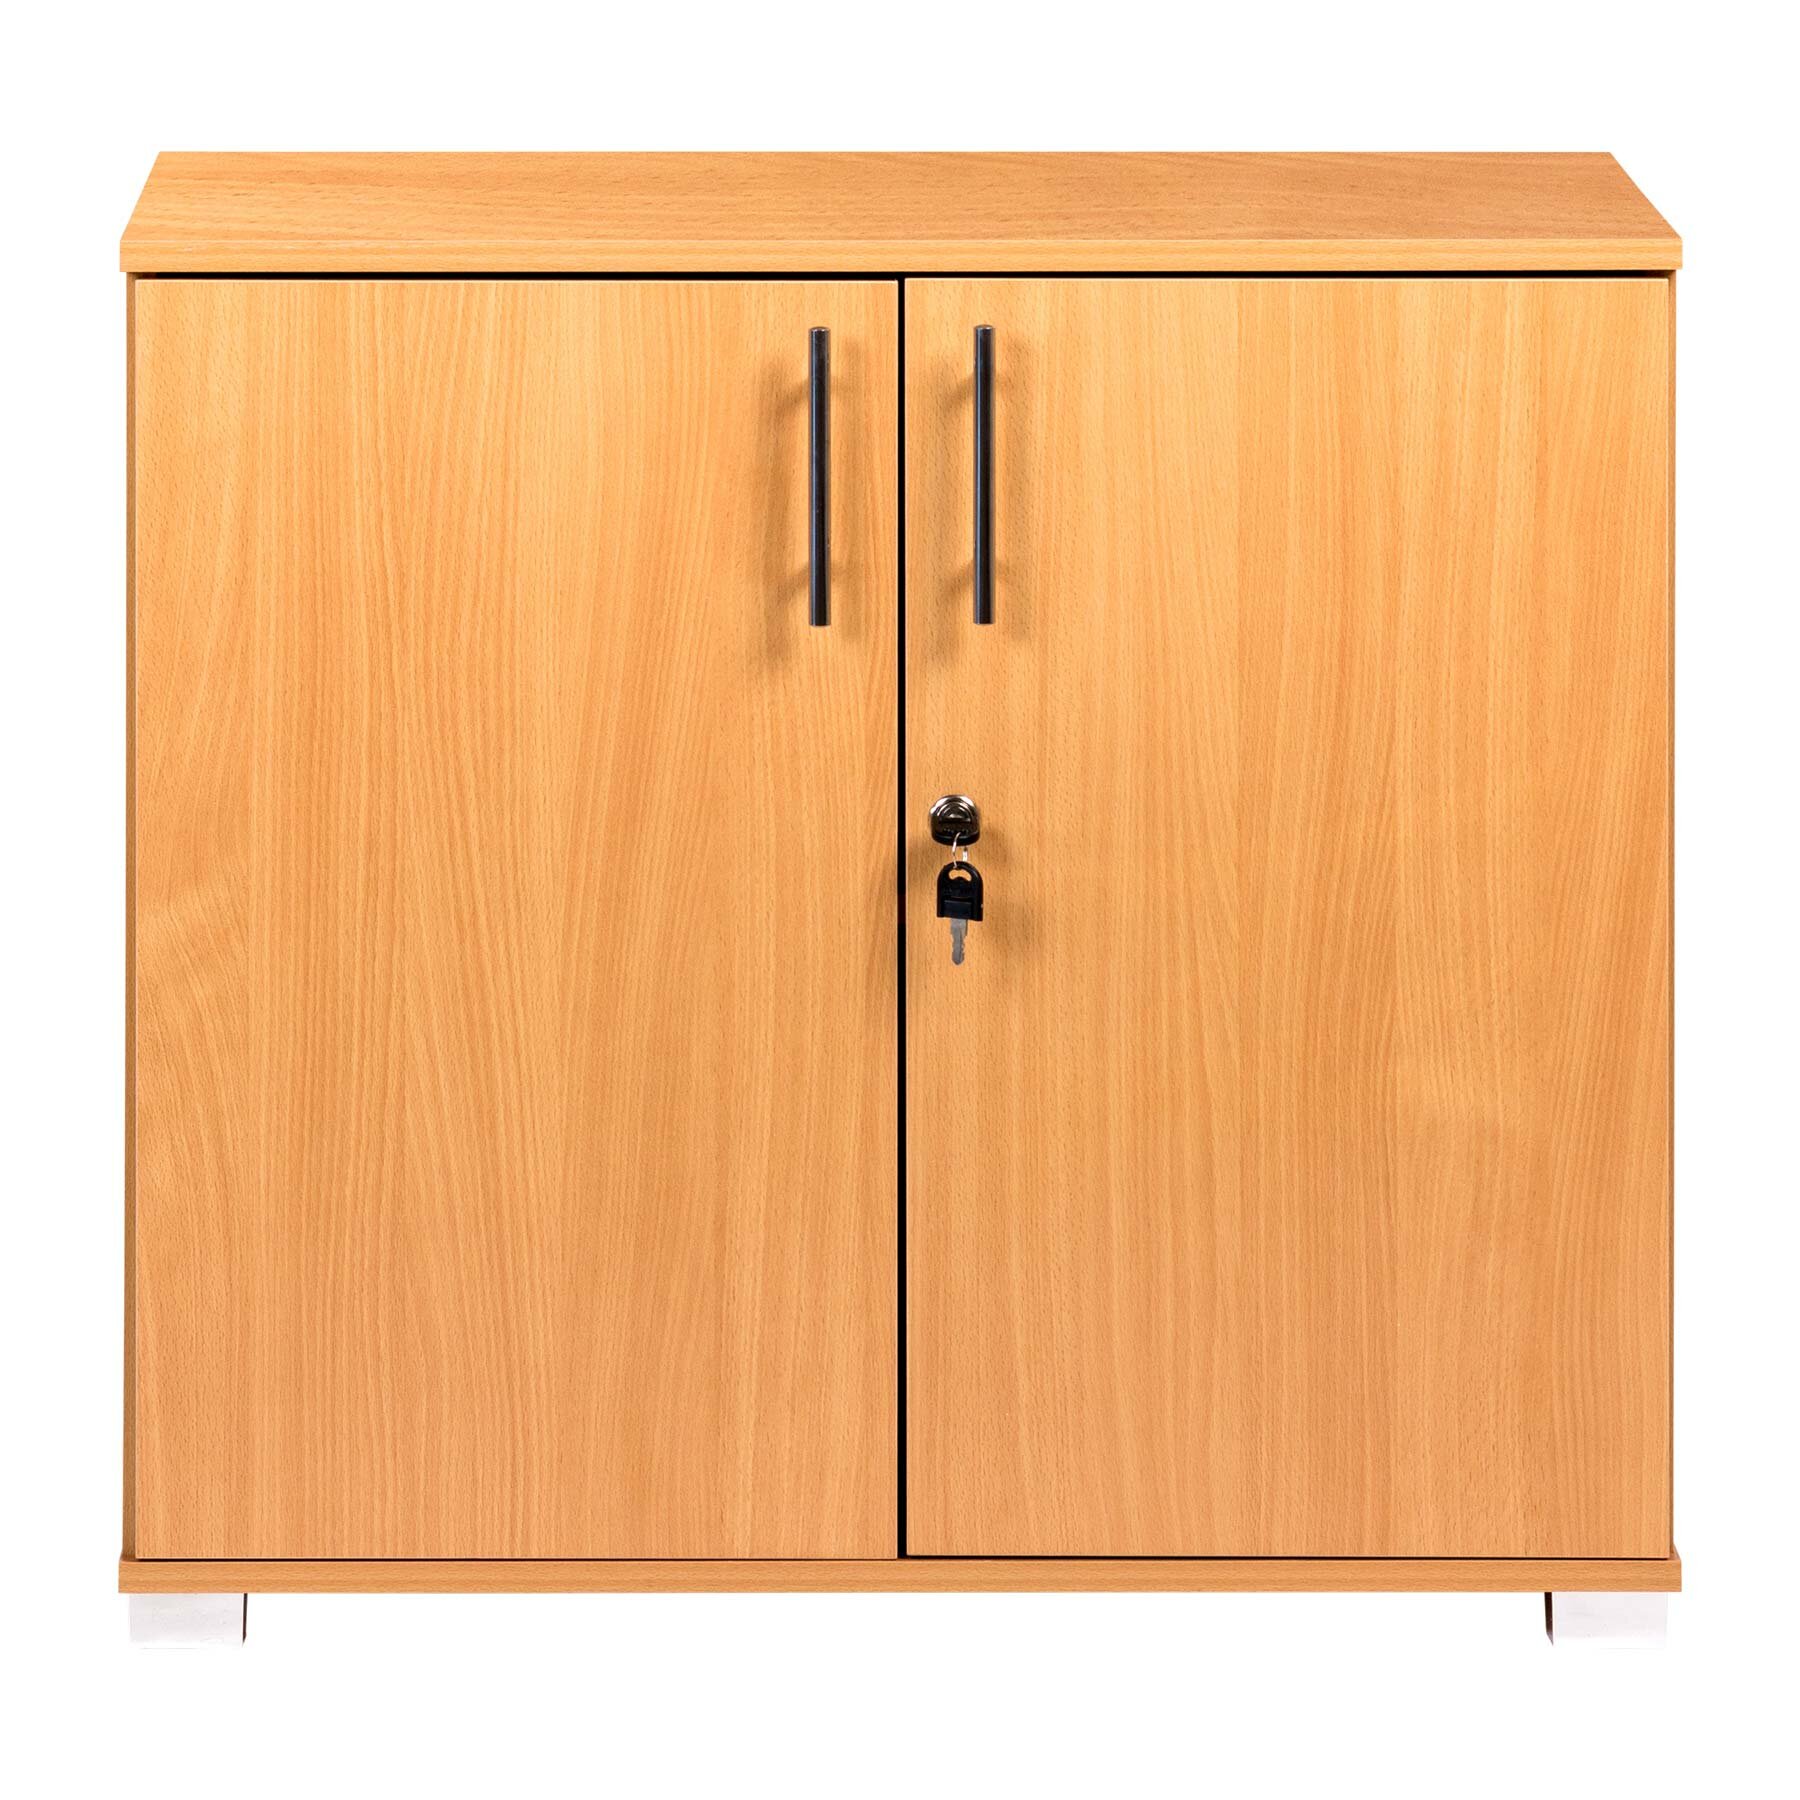 Rebrilliant Lancaster Desk Height Storage Cabinet Reviews Wayfair